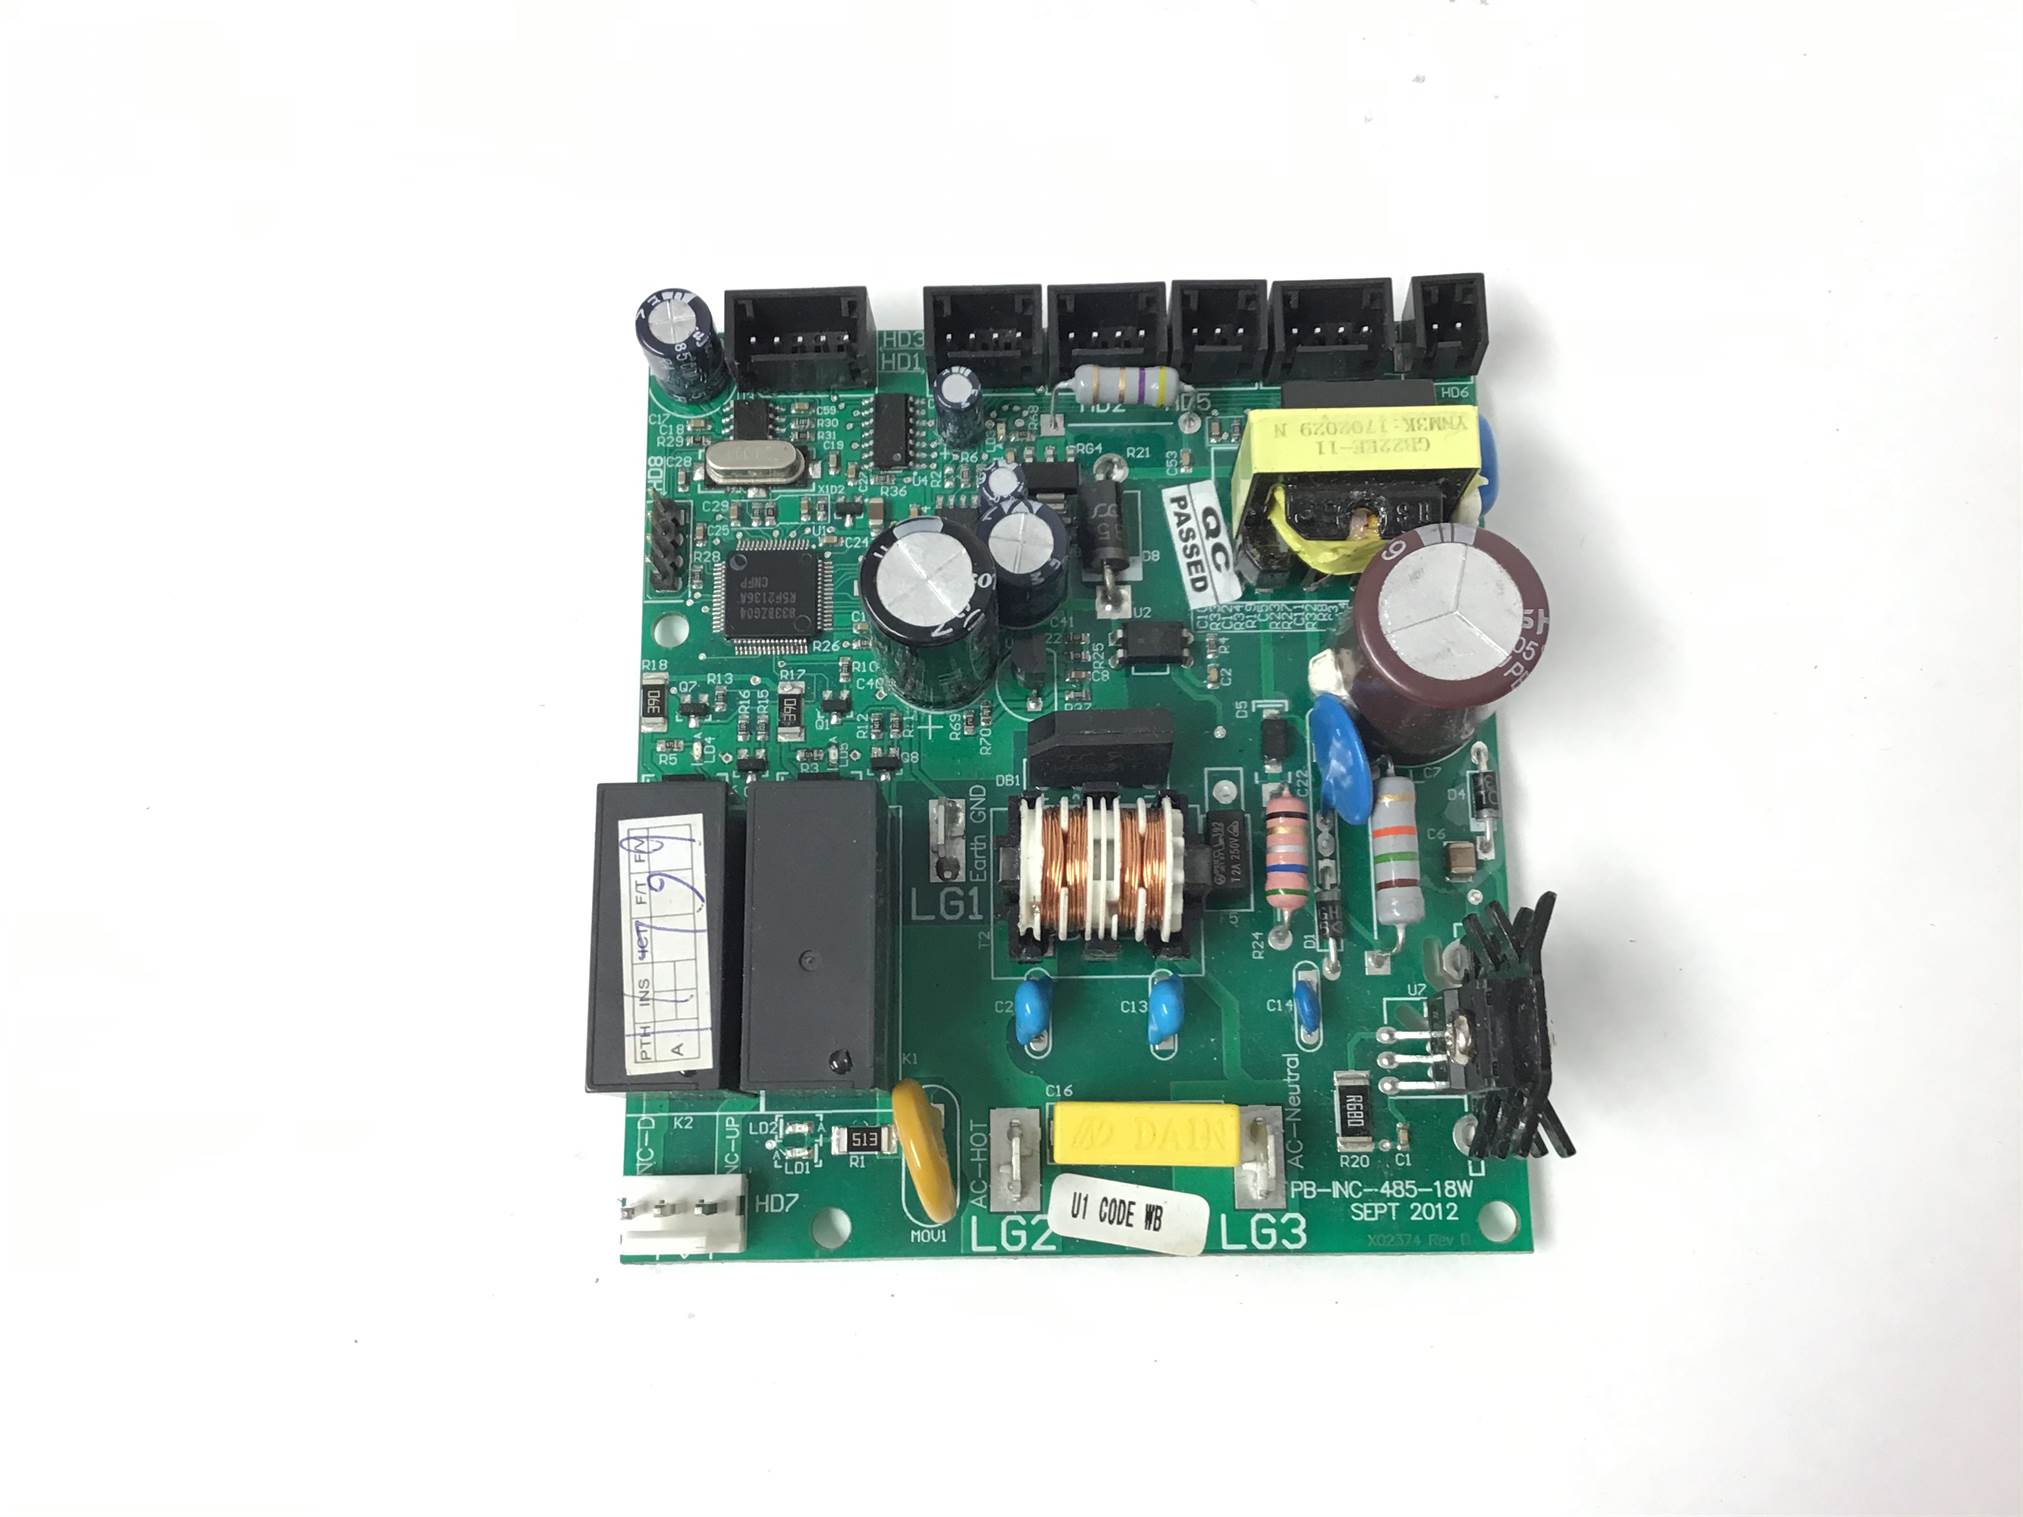 Controller Power Board PB-INC-485-18W